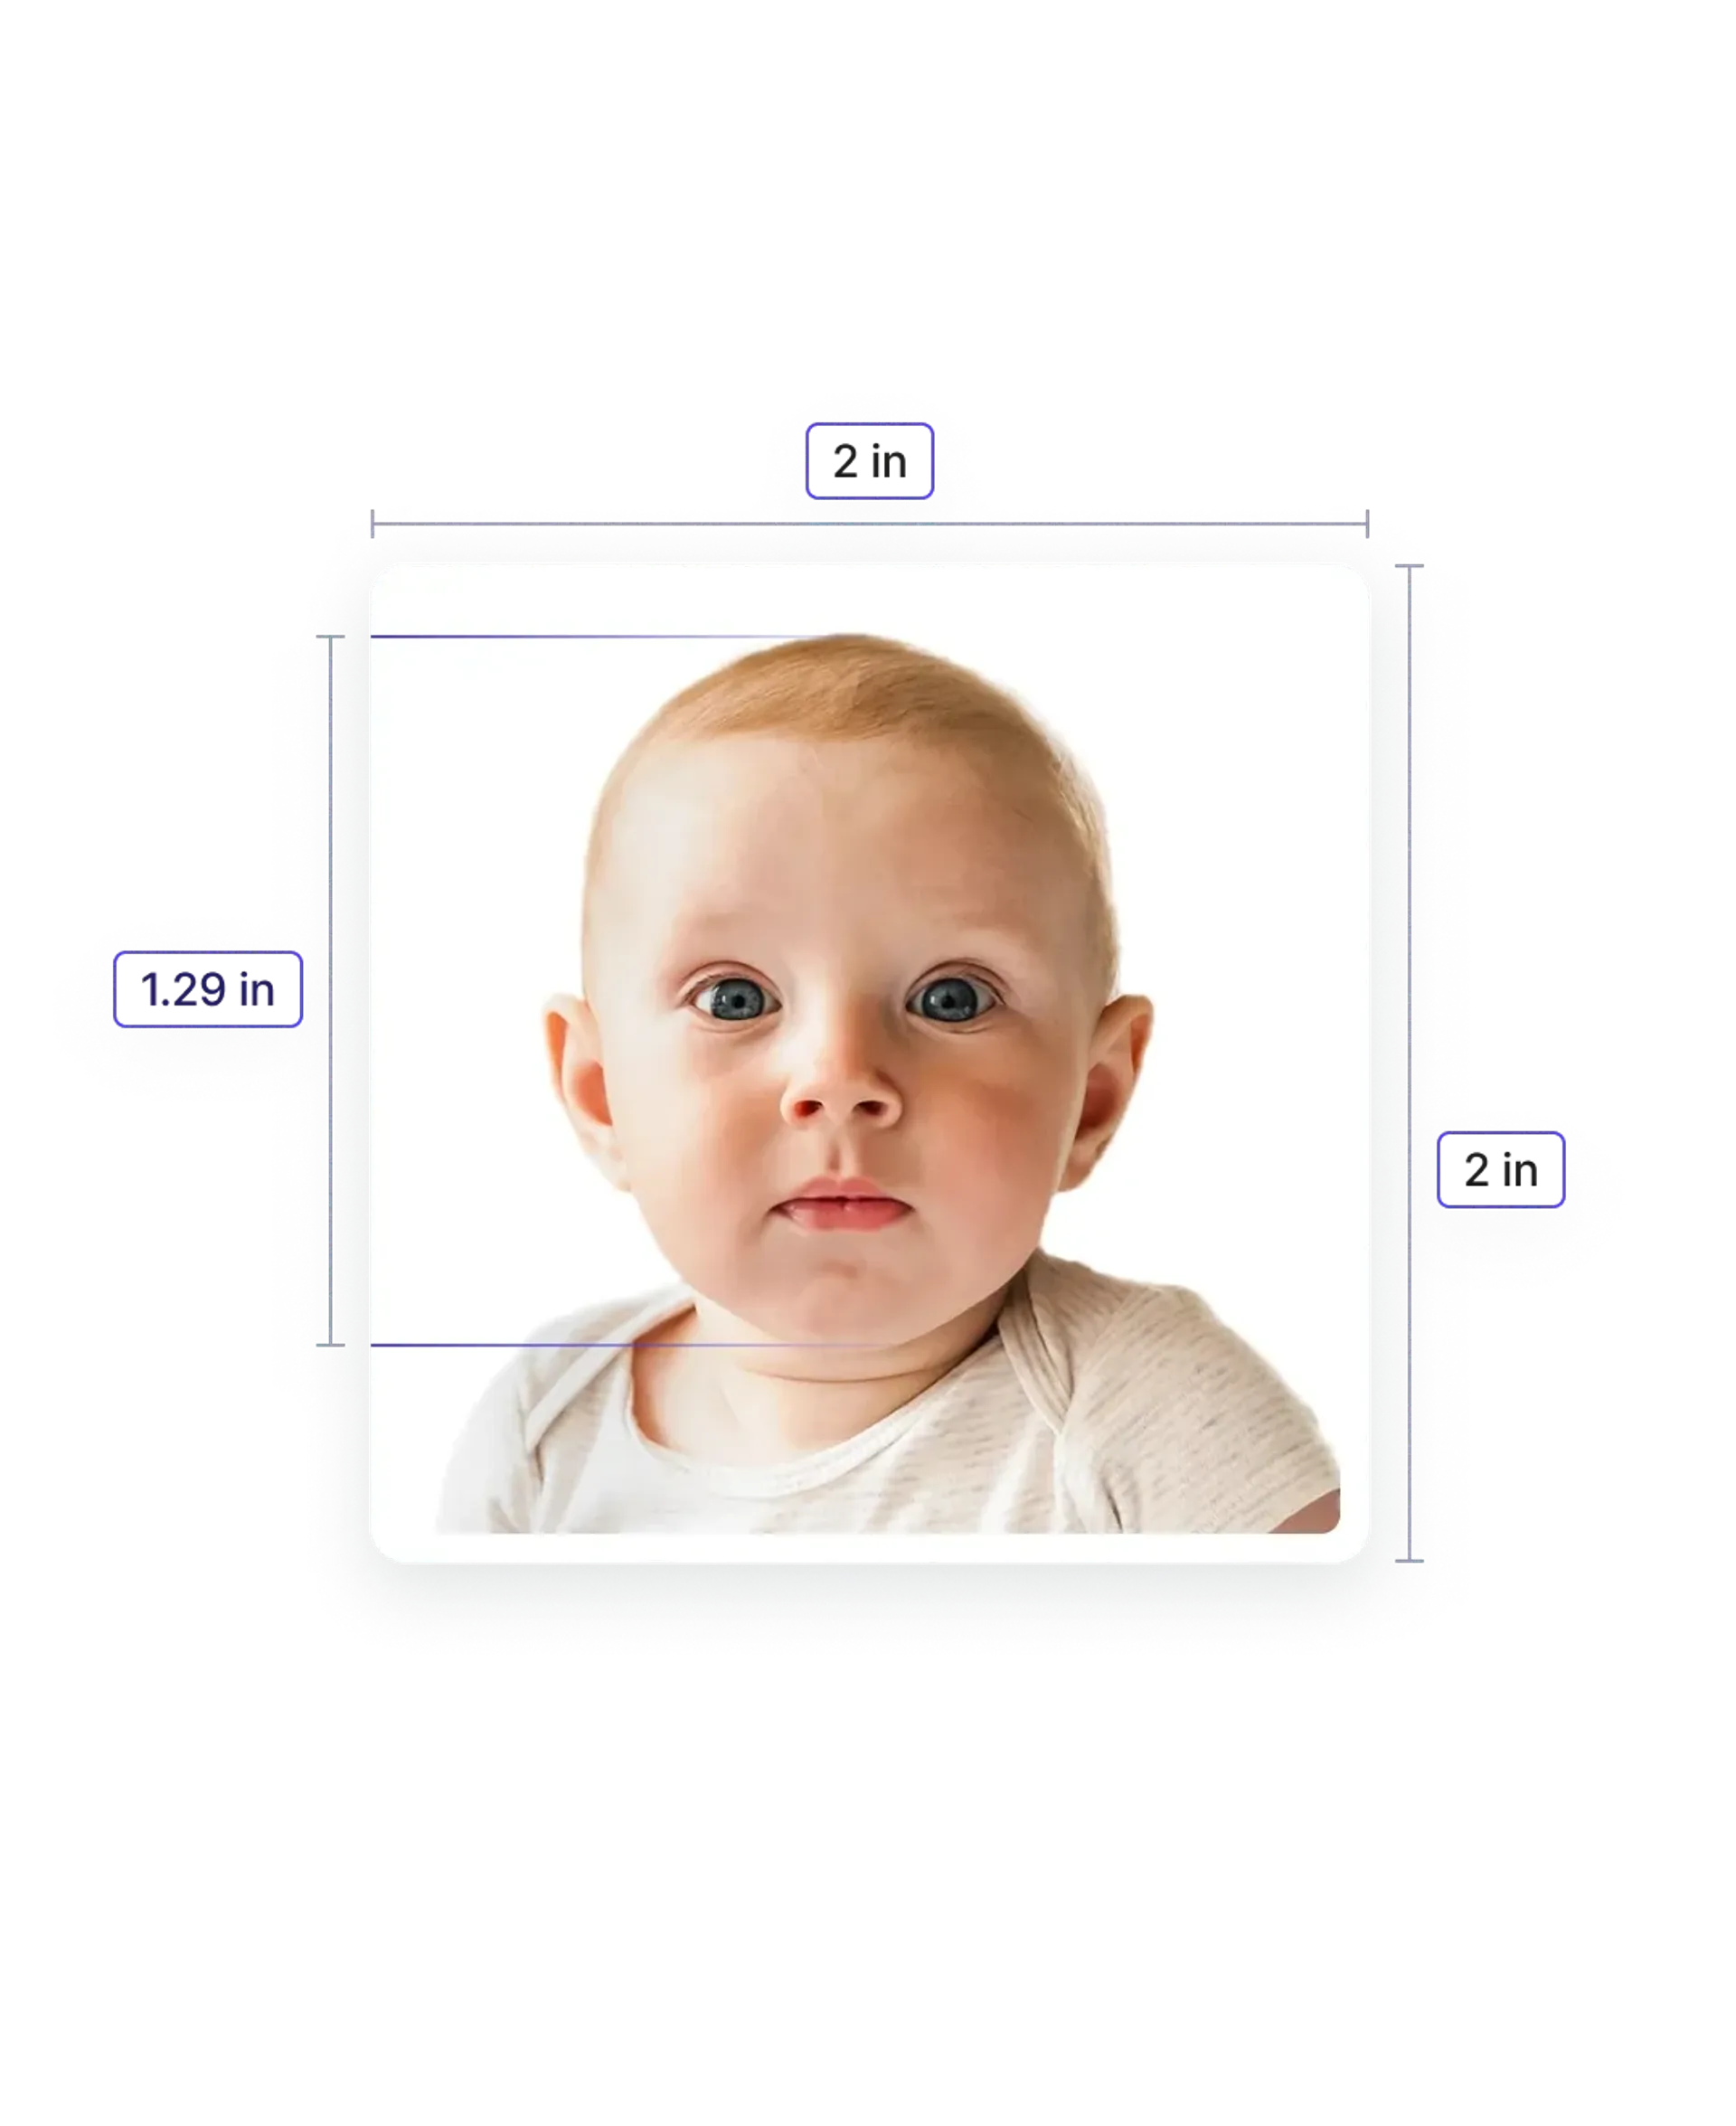 Baby Passport Photos—Specifications